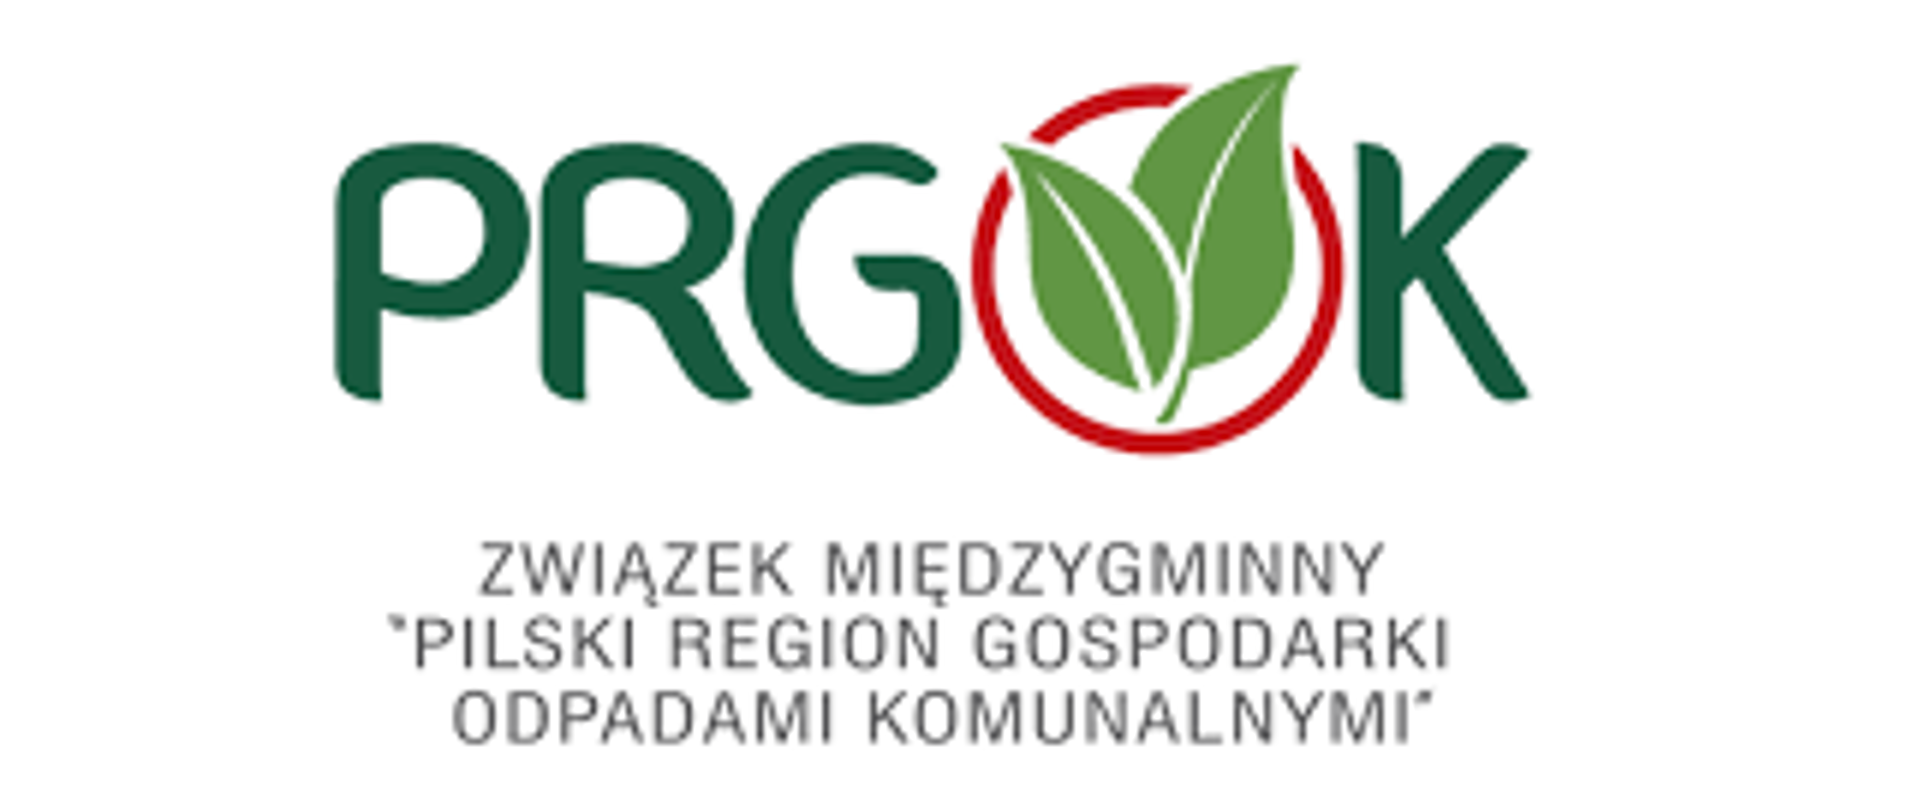 PRGOK - logo